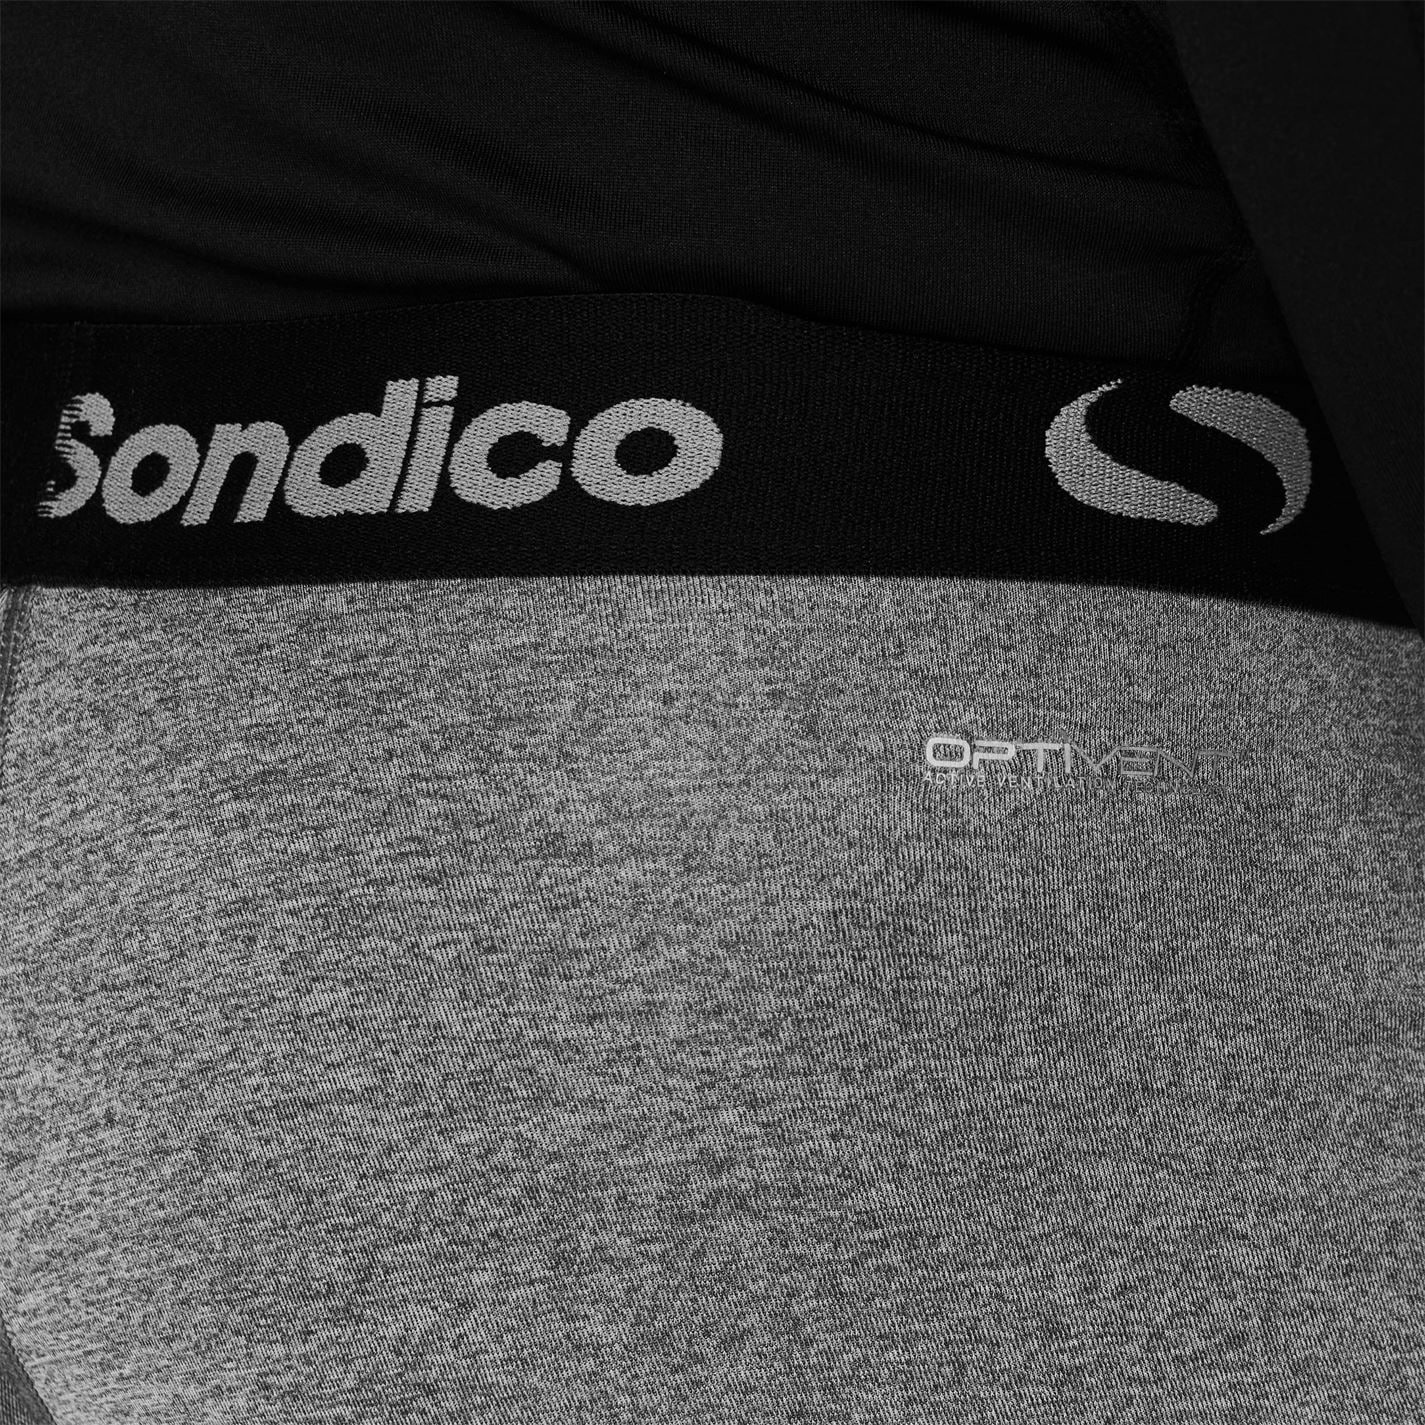 Pantaloni scurti Sondico Core 6 Base Layer pentru Barbati gri